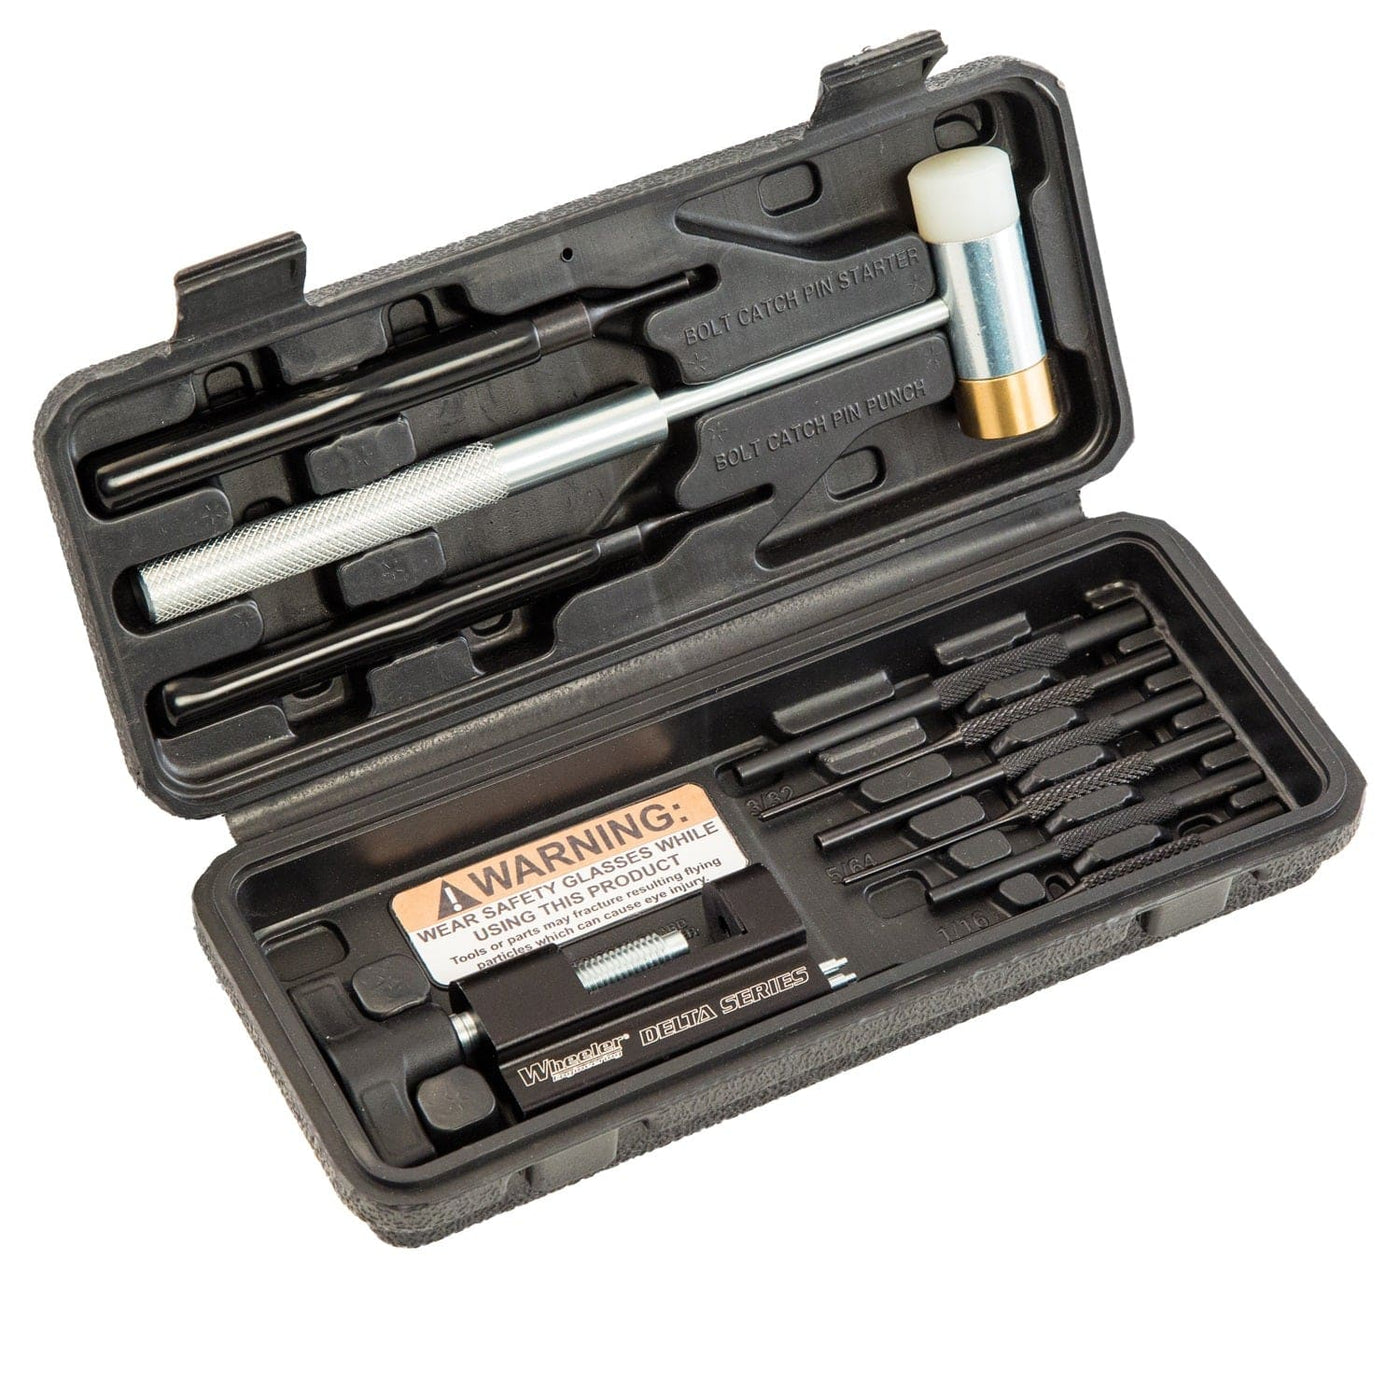 Wheeler Wheeler Delta Series AR16 Roll Pin Installation Tool Kit Shooting